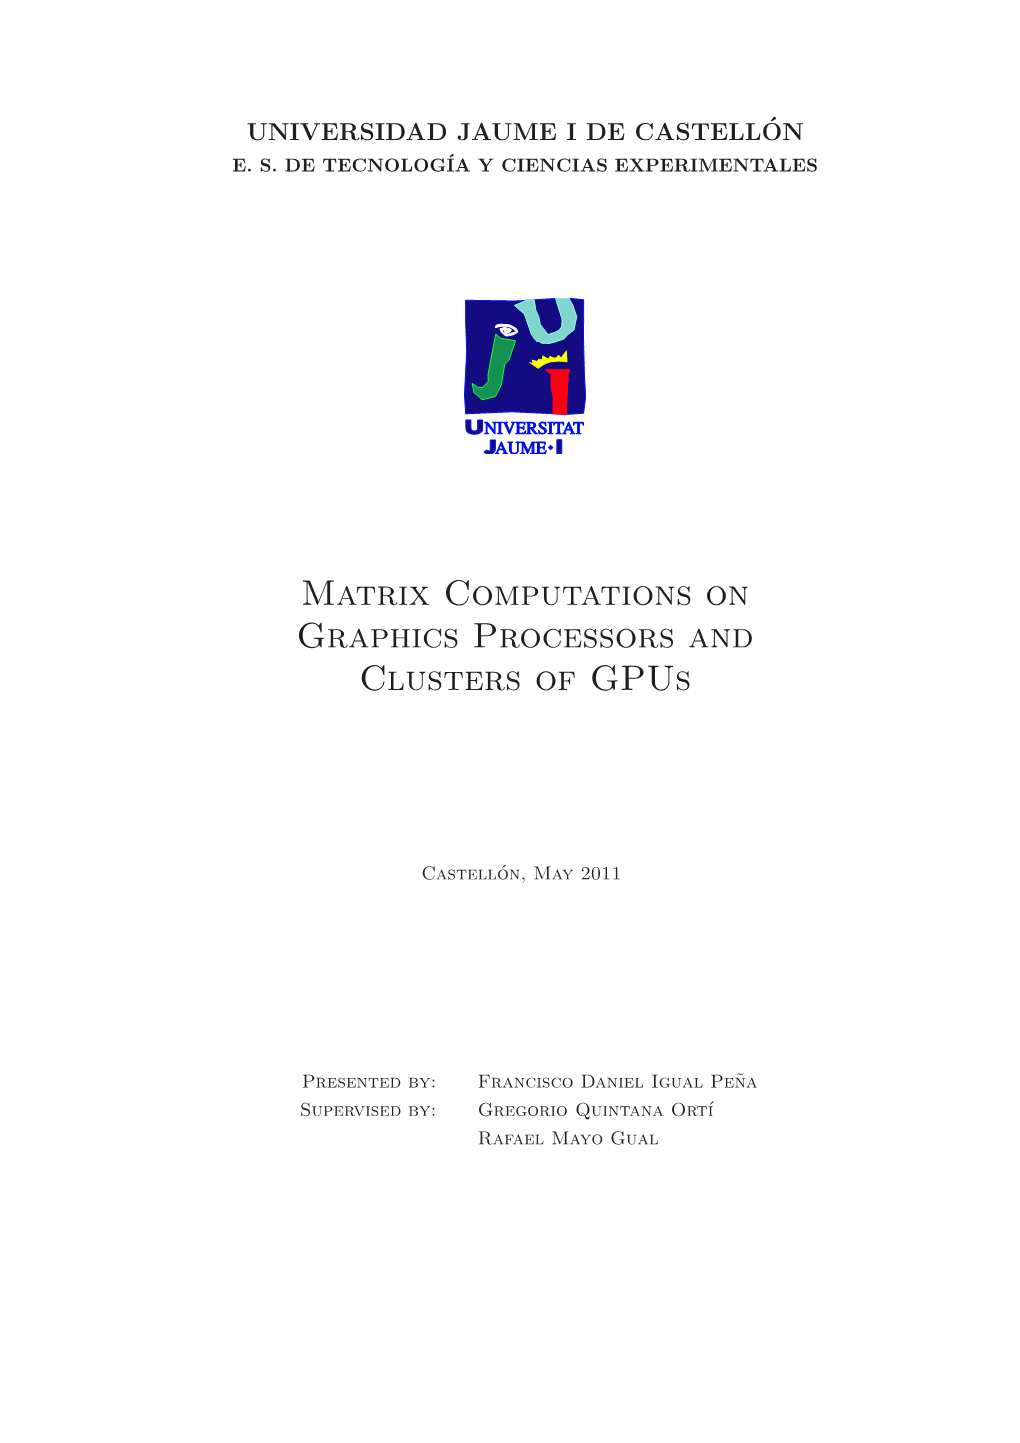 Matrix Computations on Graphics Processors and Clusters of Gpus